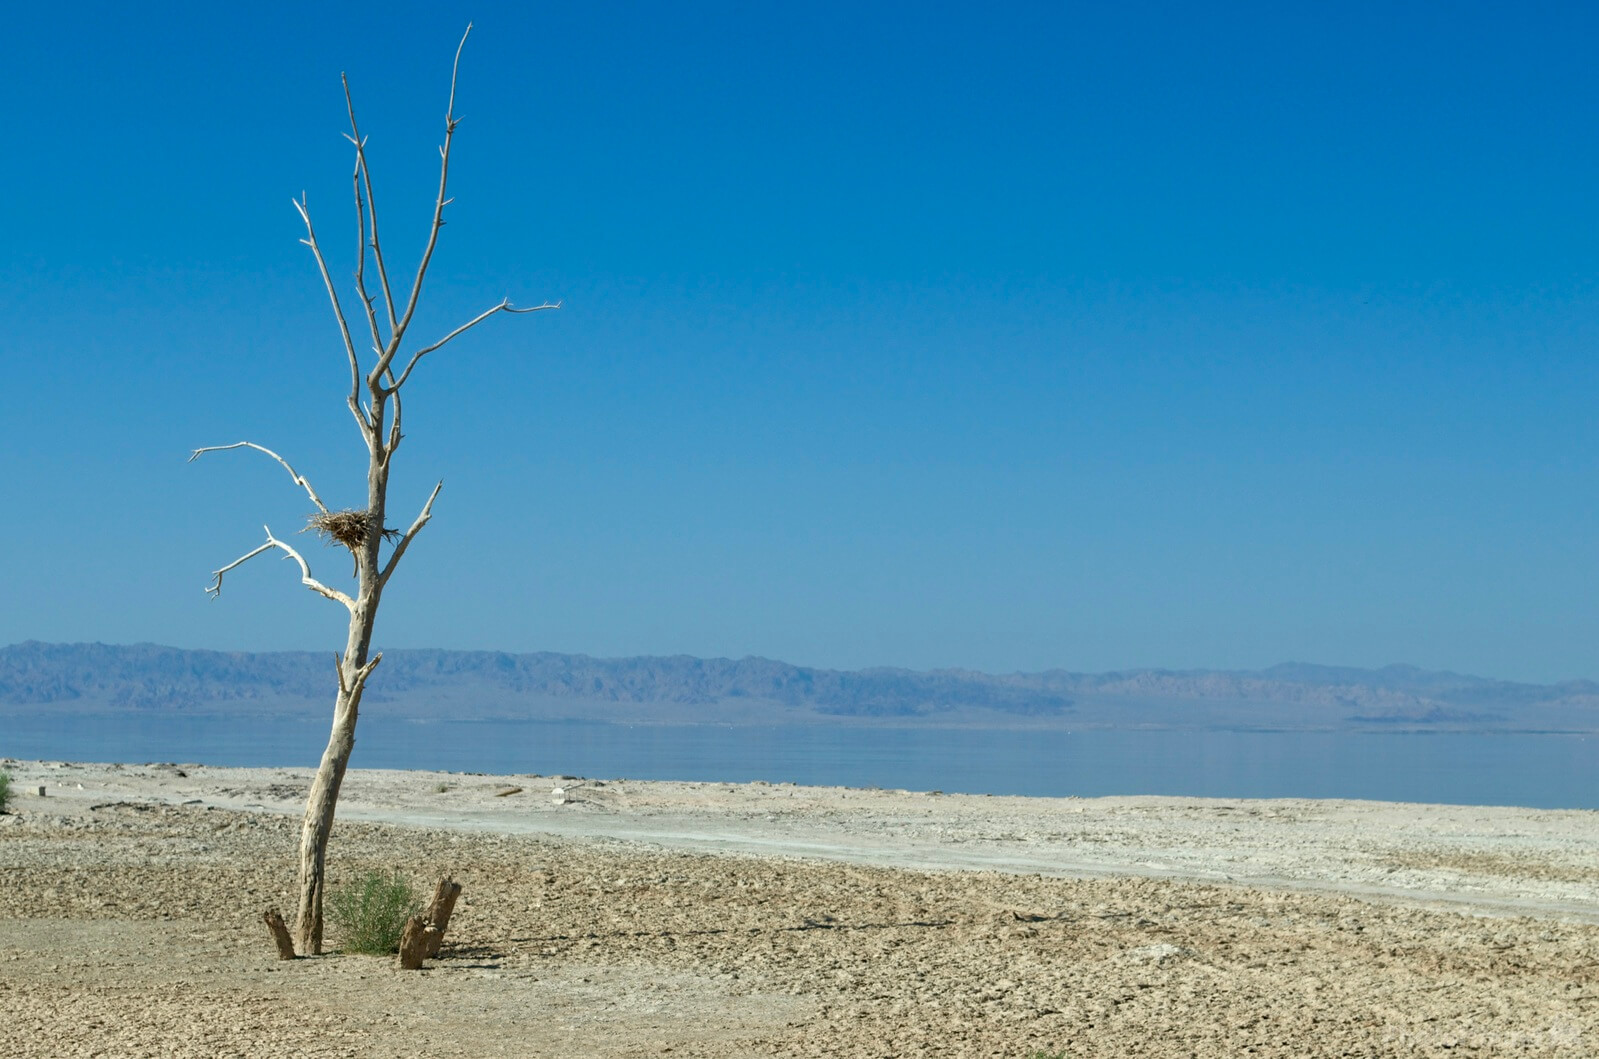 Image of Salton Sea, California by Steve West